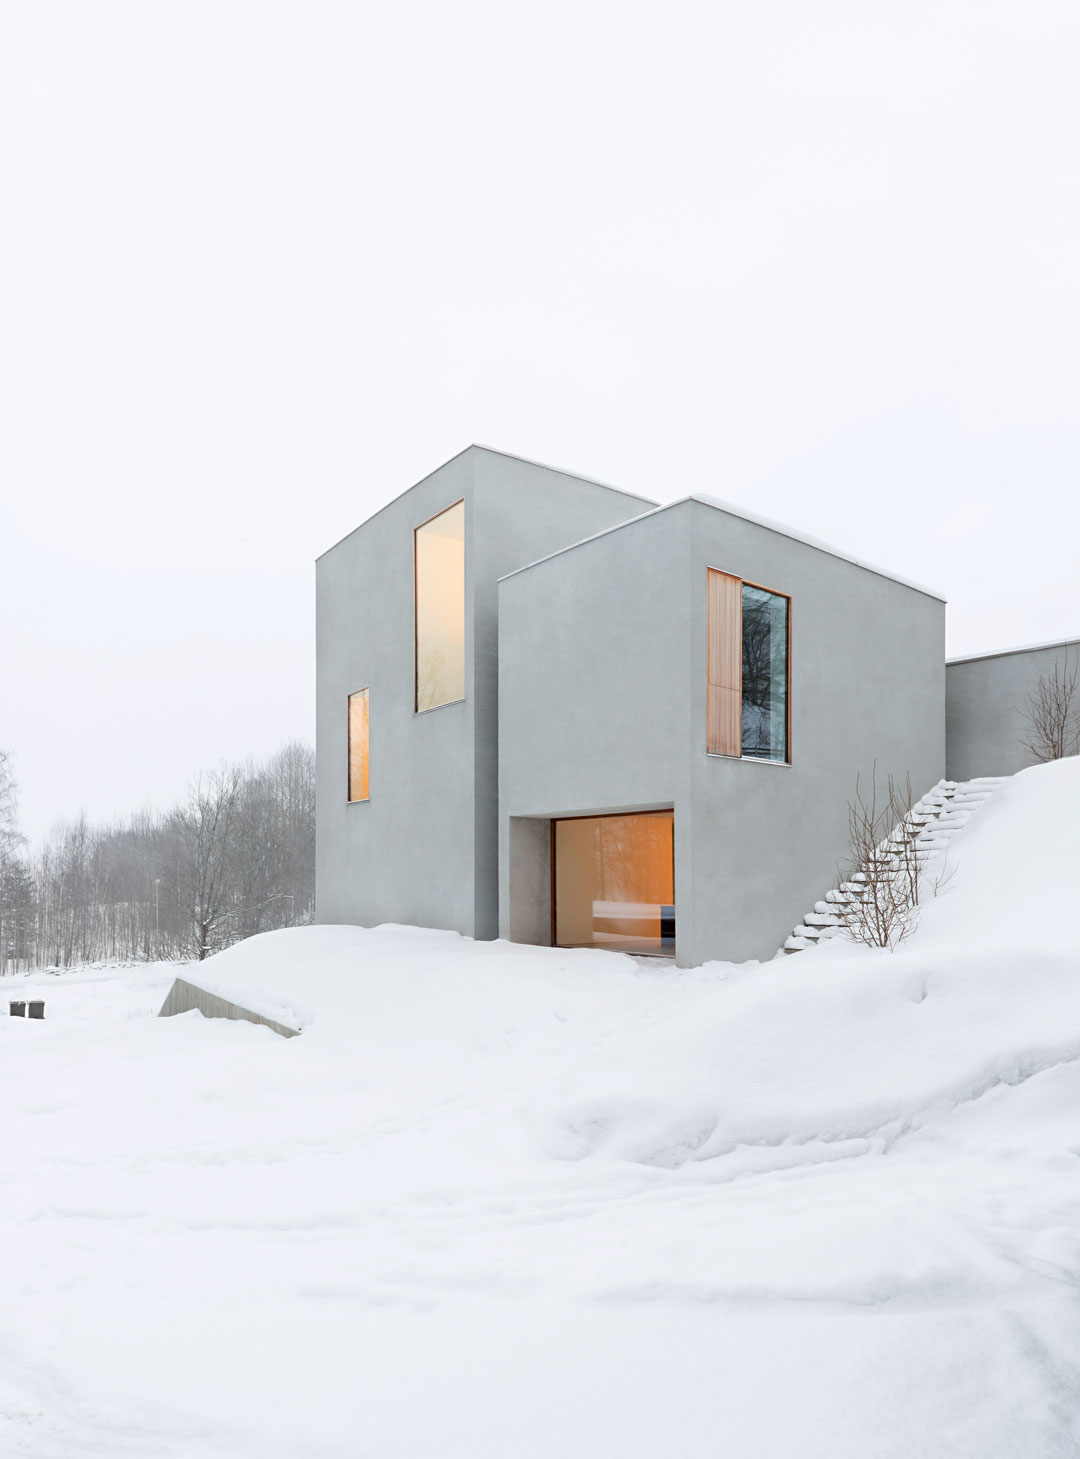 The Palmgren House, Sweden, by John Pawson